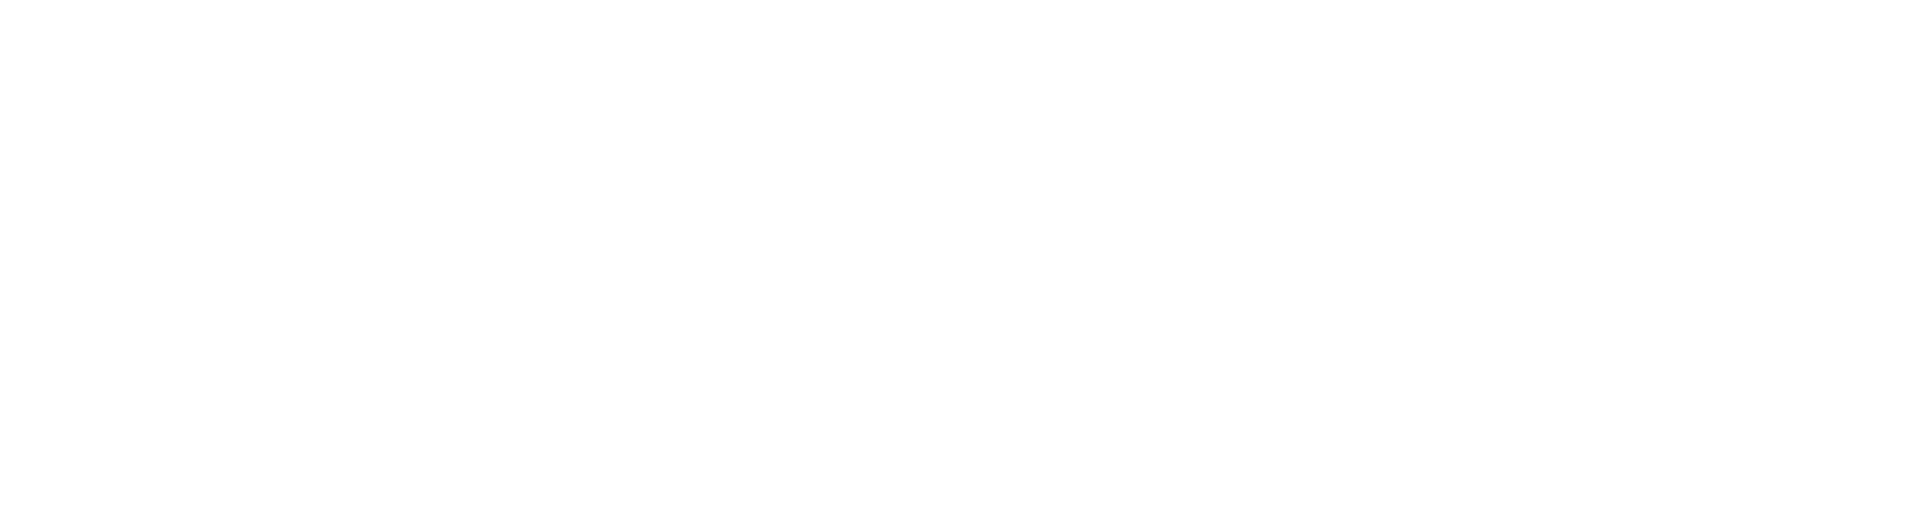 Storstugan_Logotype_White